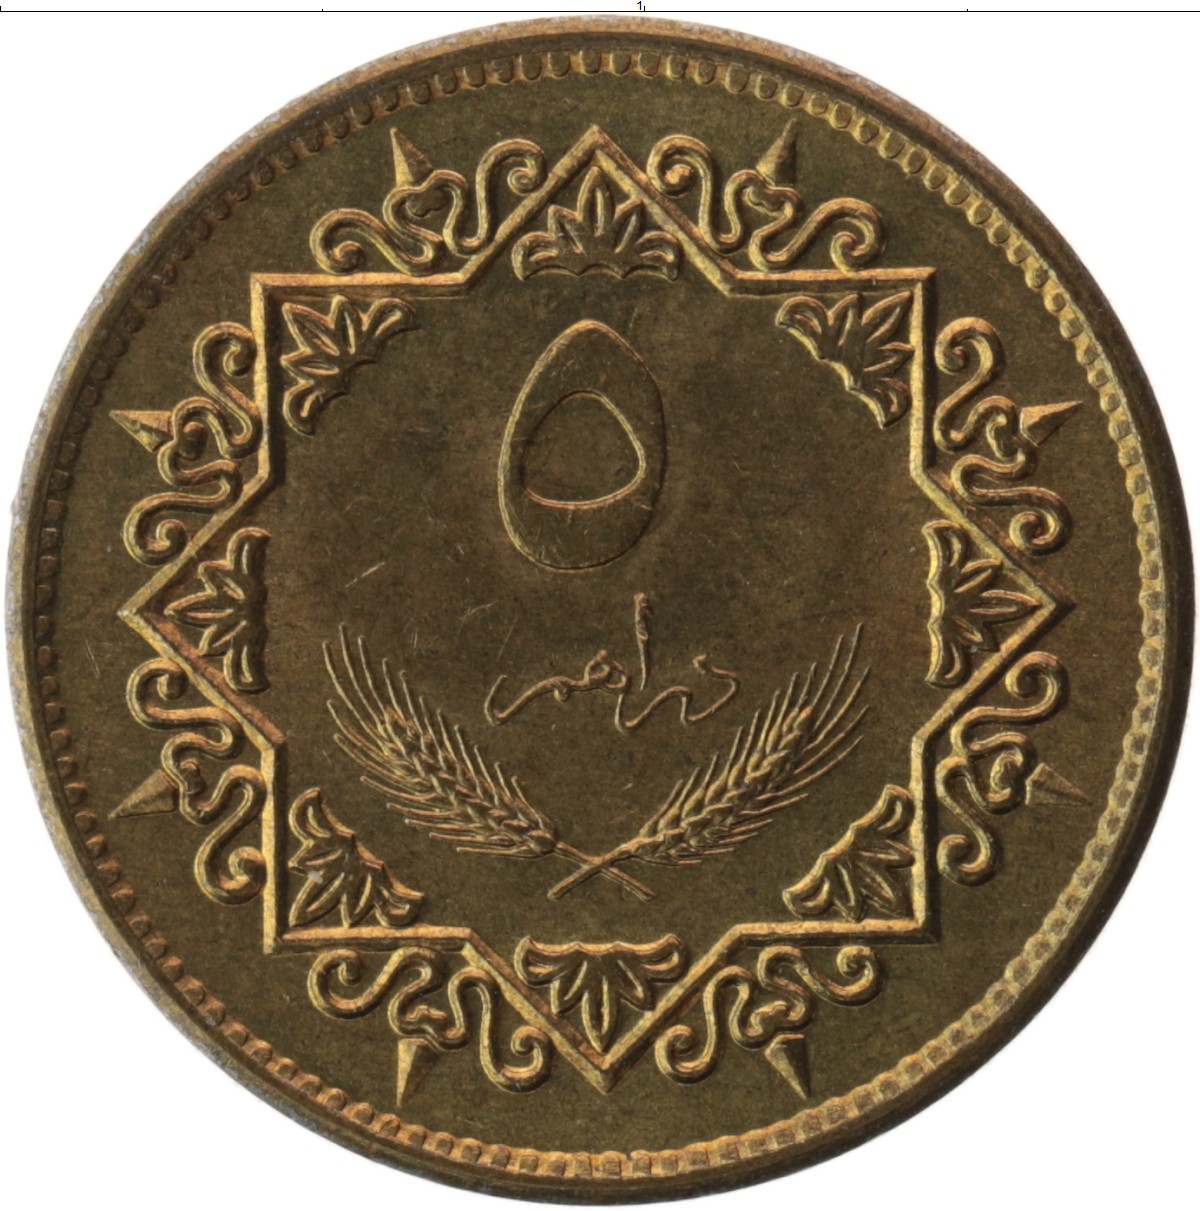 Дирхам сейчас. Арабская монета 5 дирхам. Монеты Ливия дирхам. Монеты в Ливии 5 дирхам. Металлические монеты дирхам.